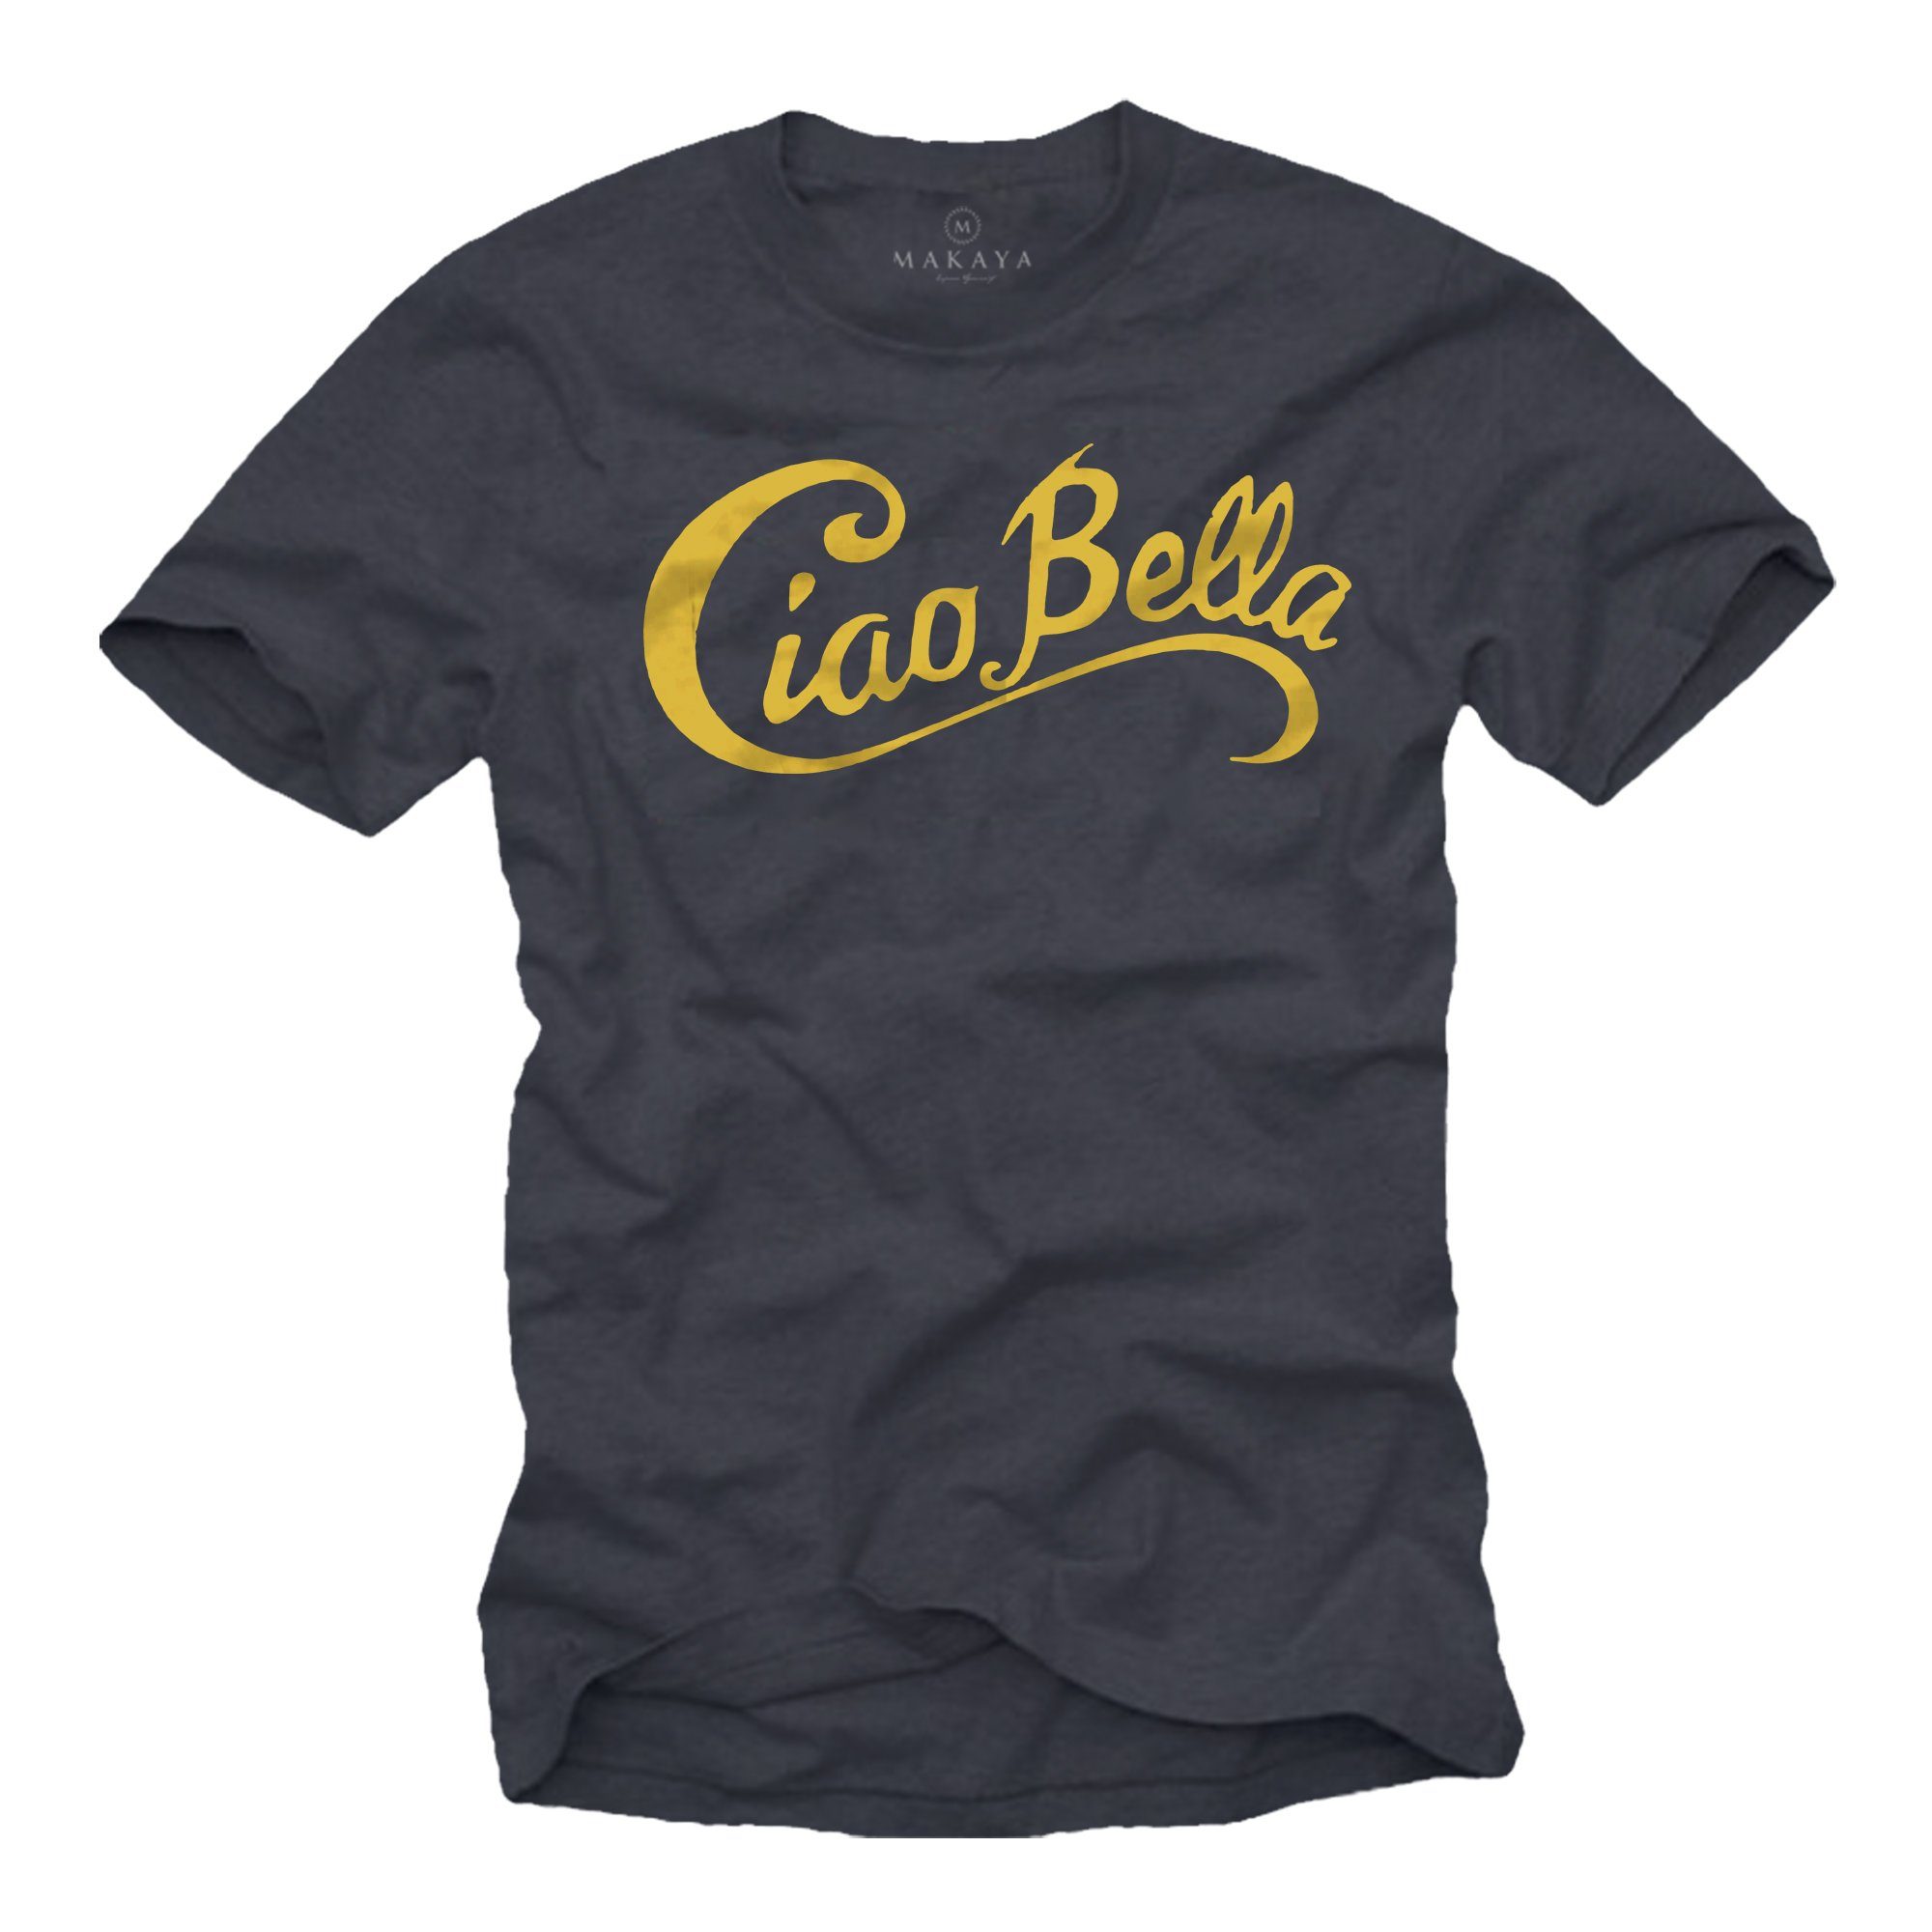 MAKAYA Print-Shirt Herren Italienischer Spruch Ciao Bella Coole Mode Italien Style Logo, Motiv Blaugrau